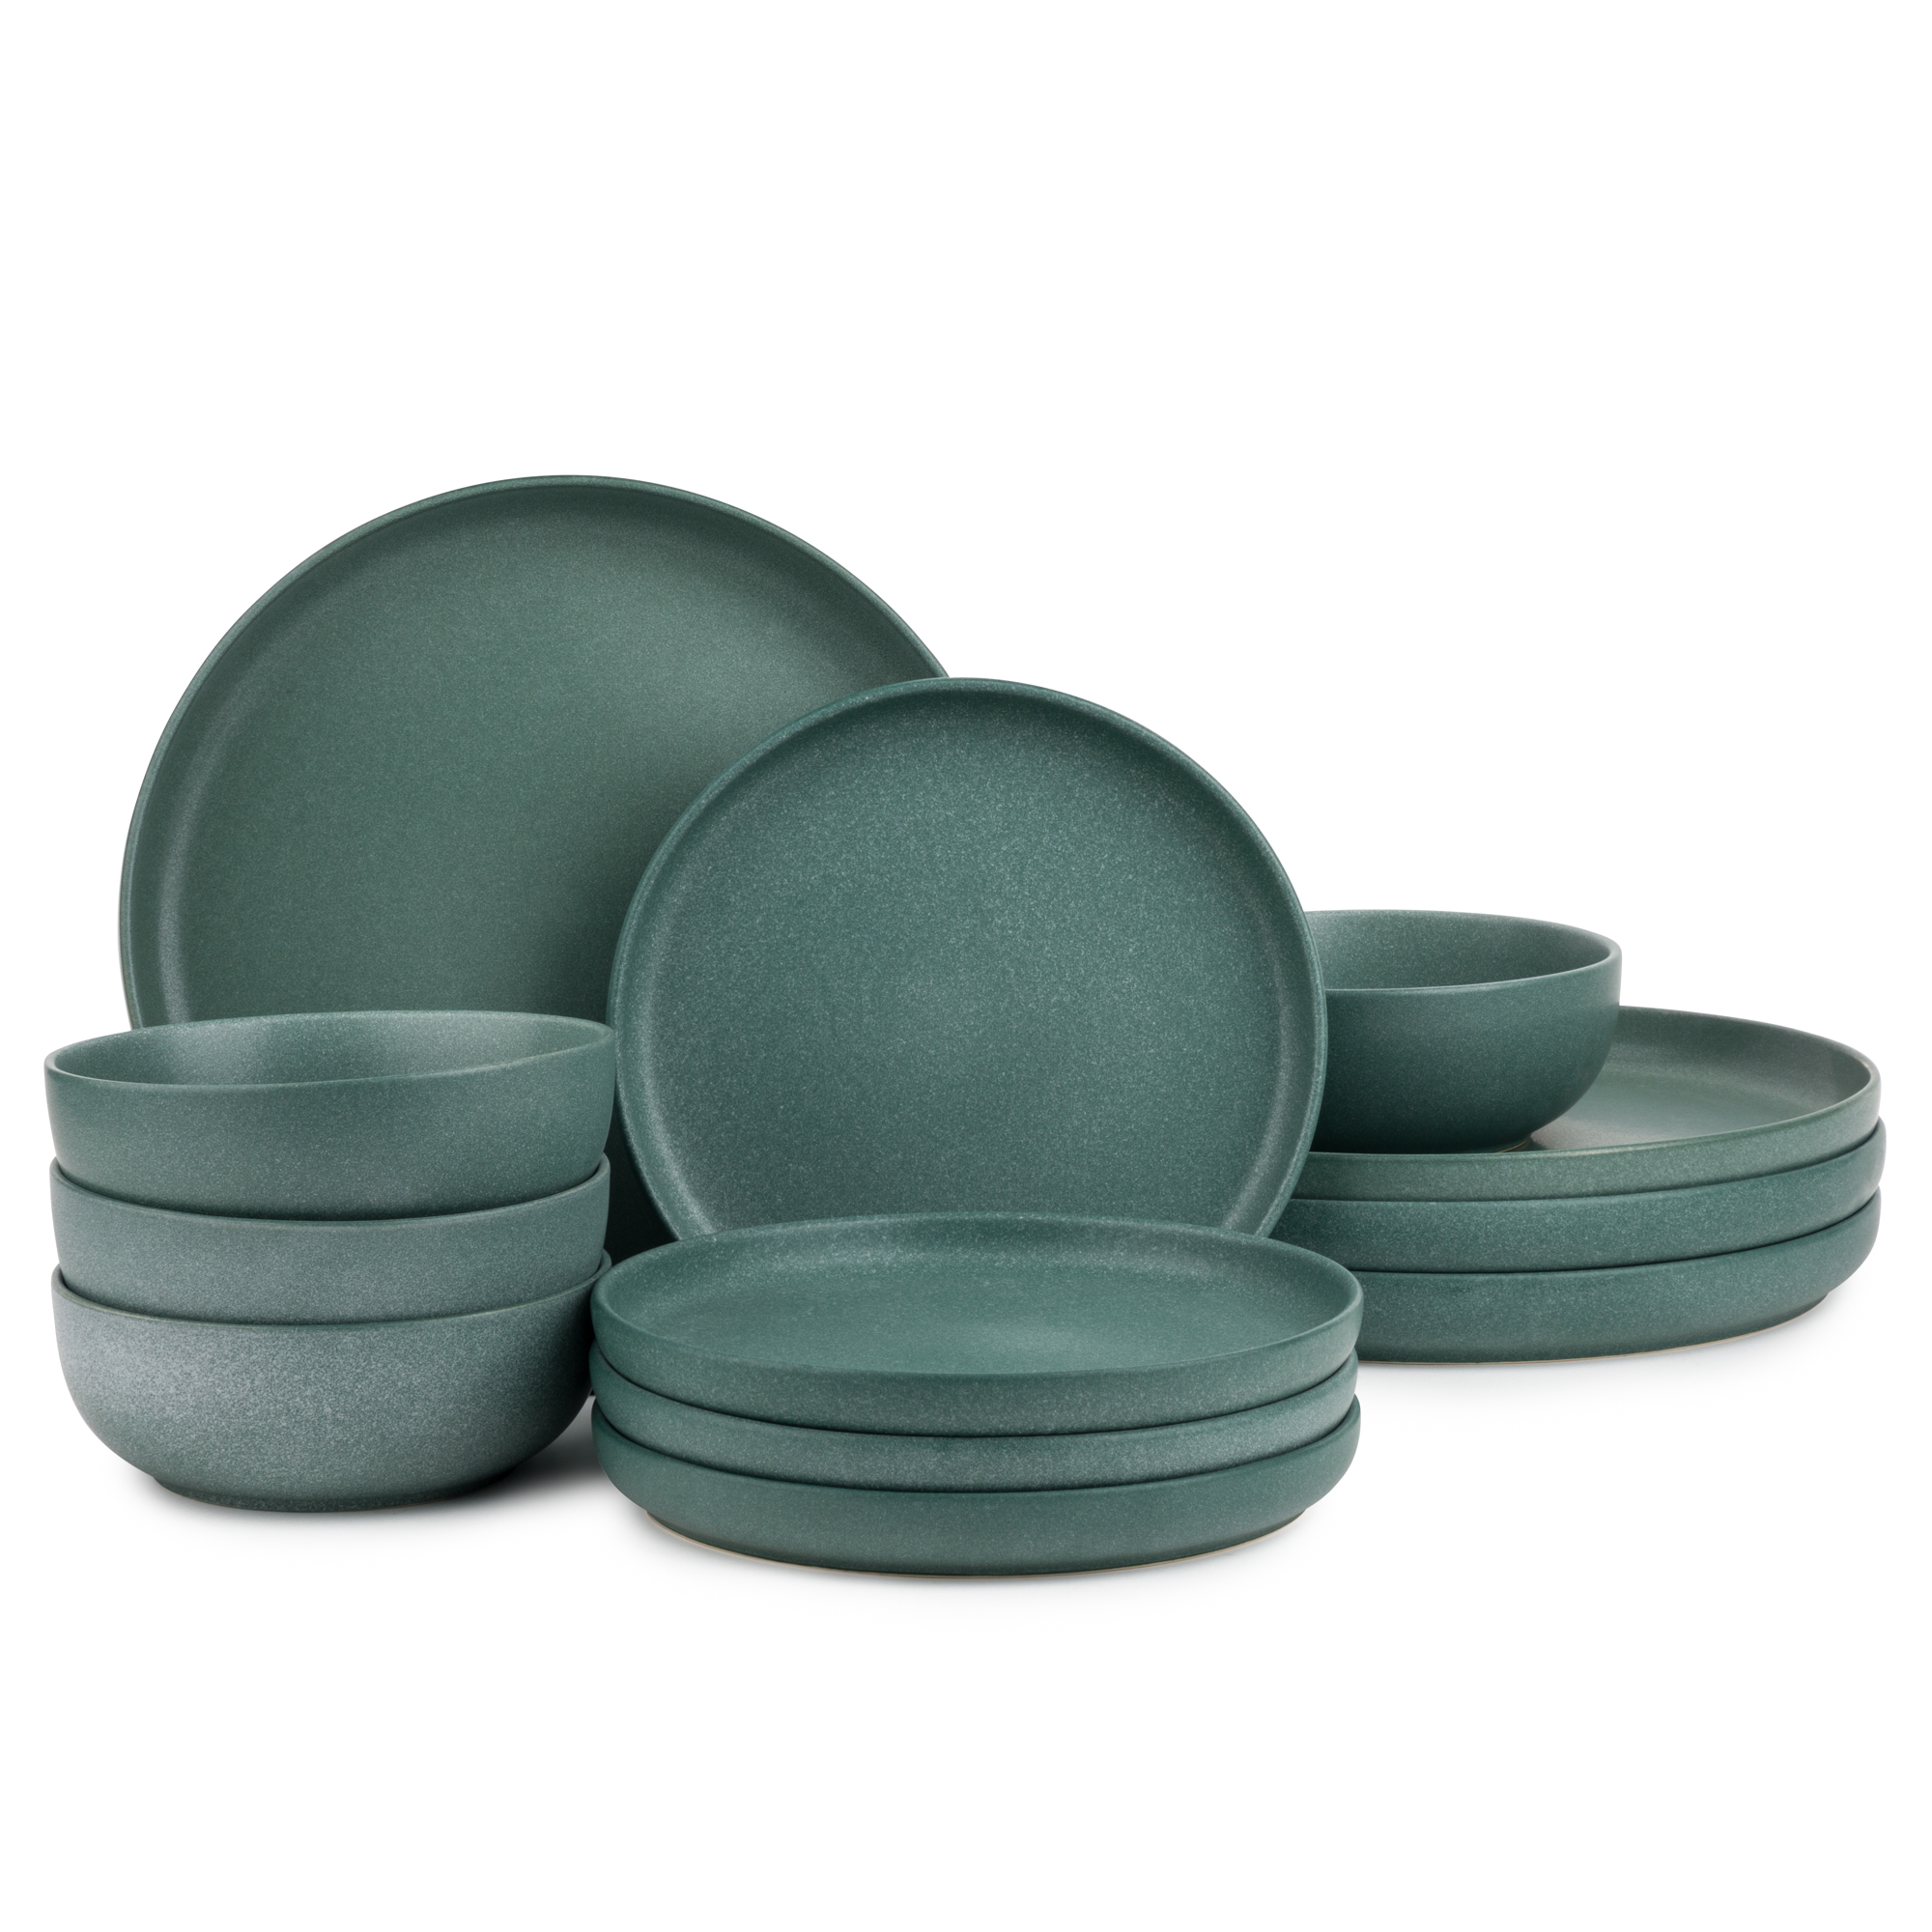 Thyme & Table 12-Piece Stoneware Dinnerware Set, Caspian Green - image 1 of 6